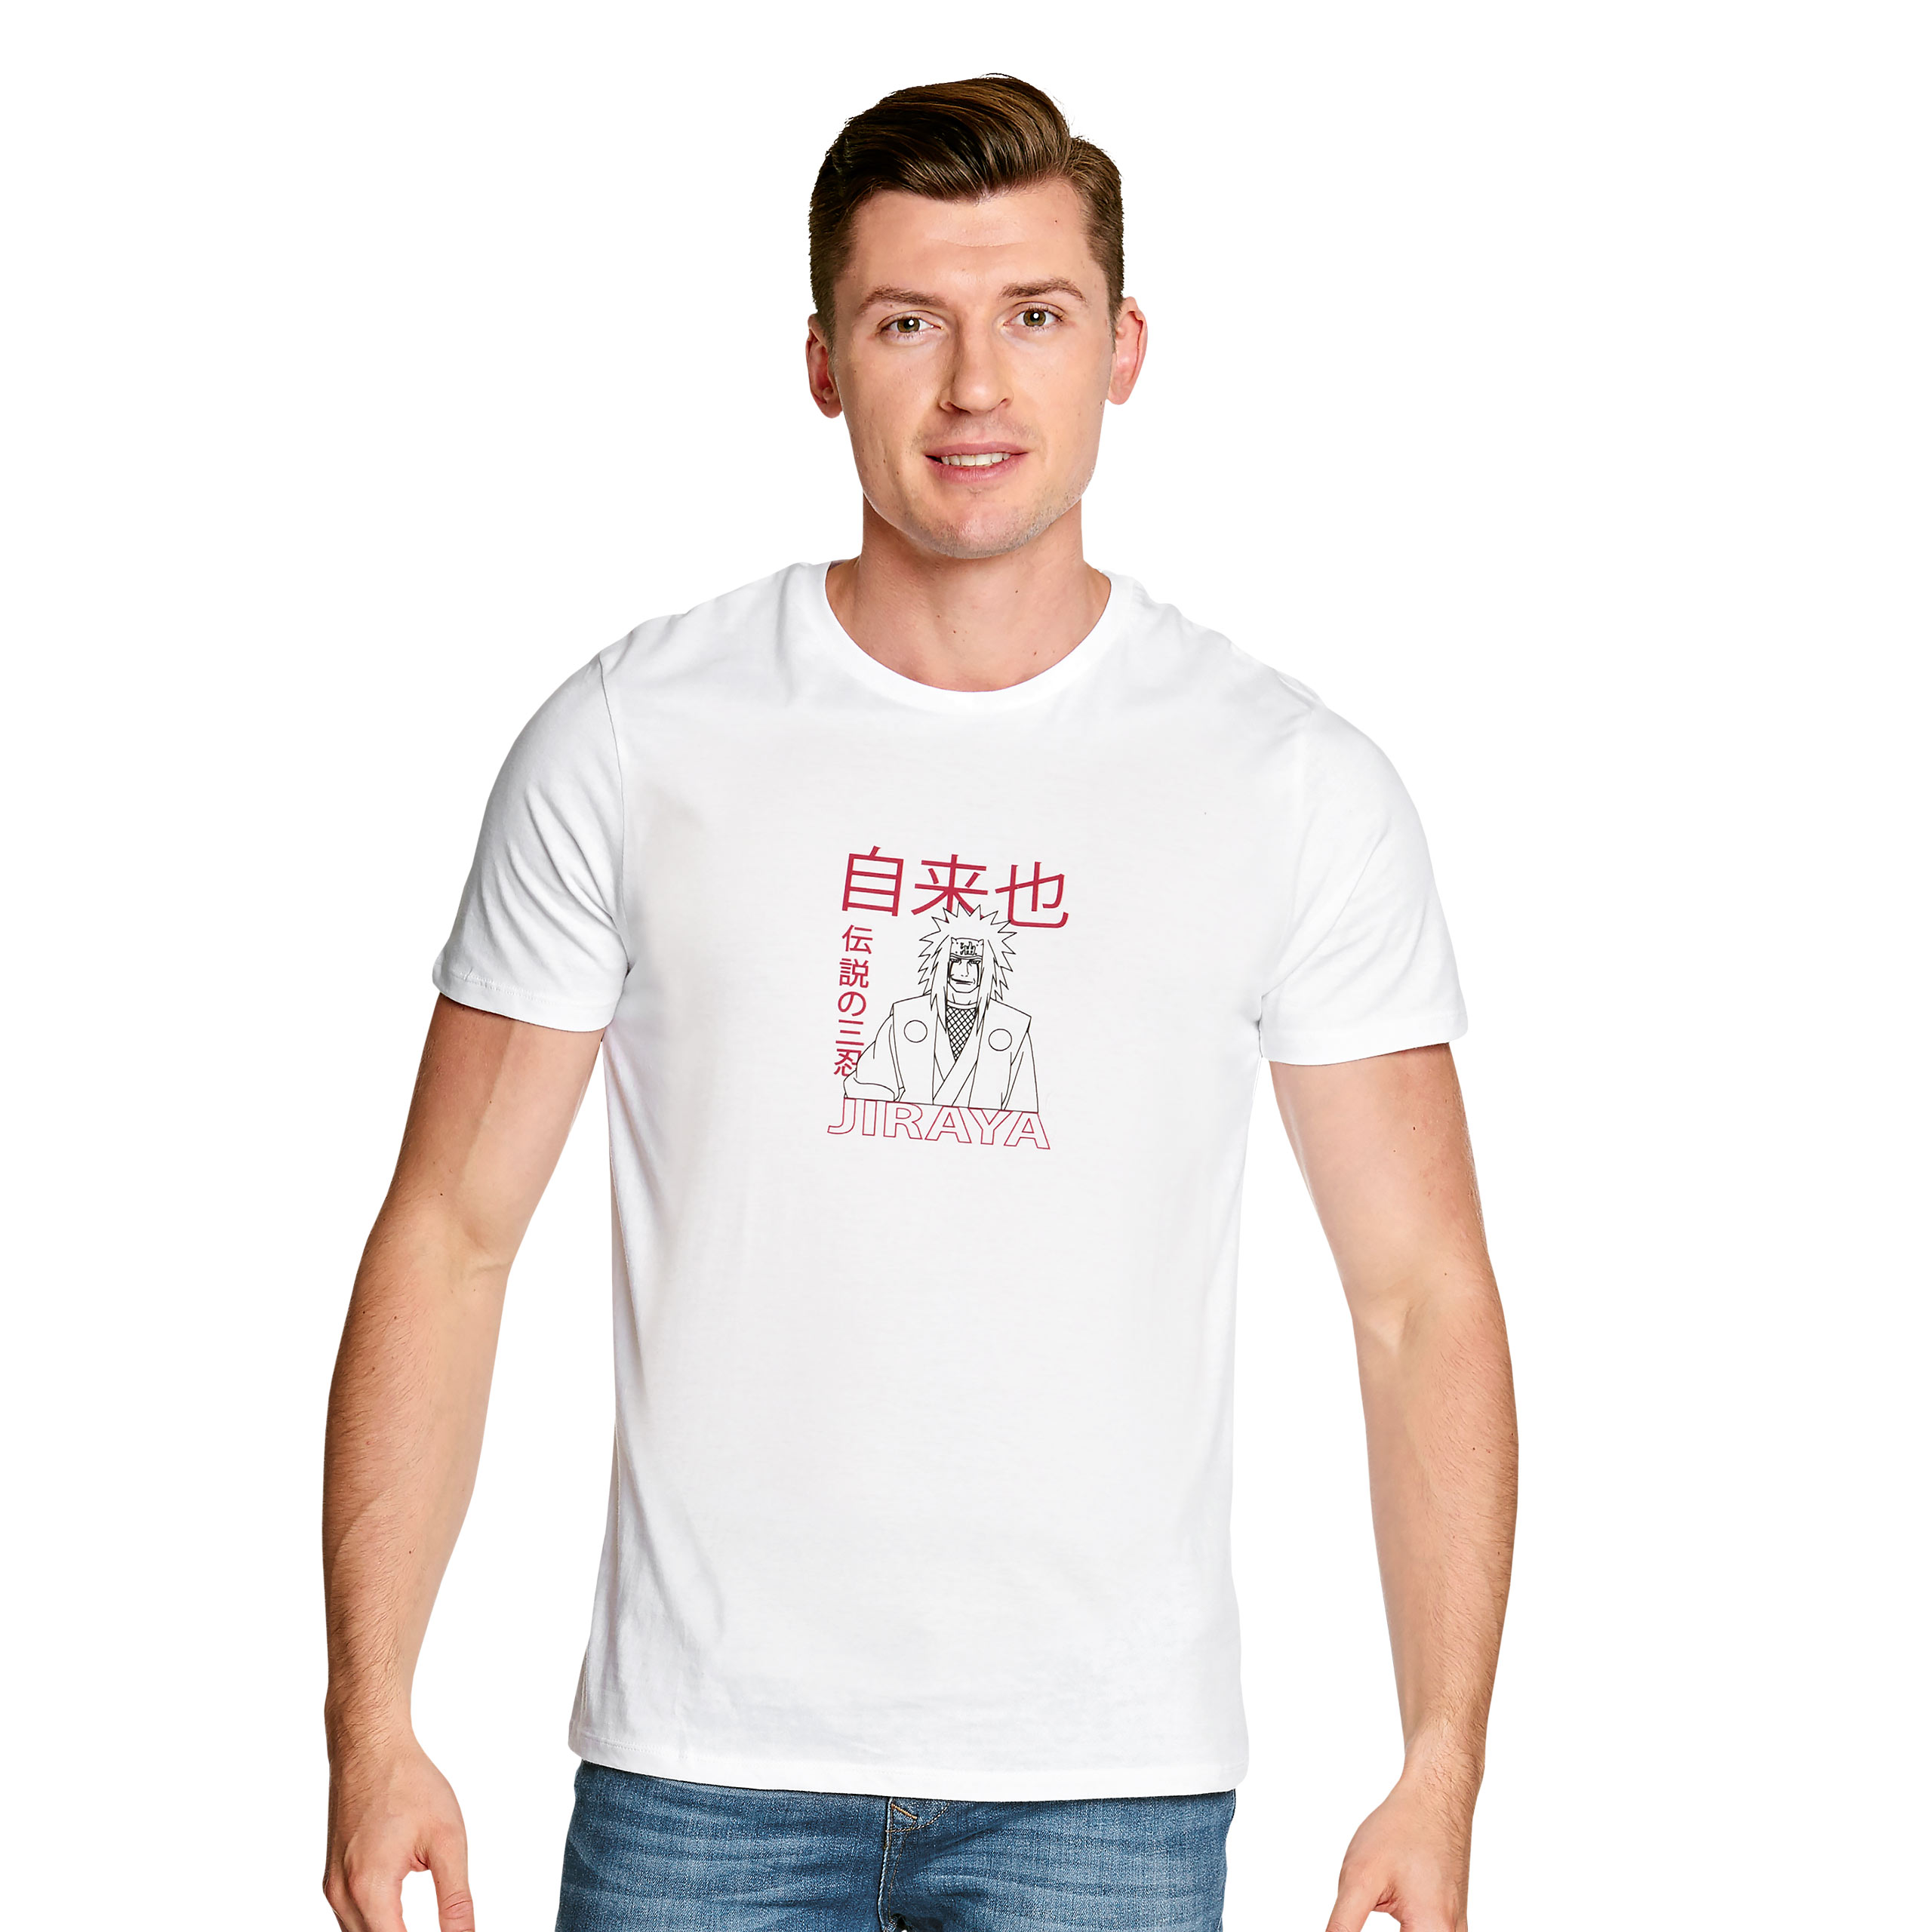 Naruto - T-shirt Jiraya blanc